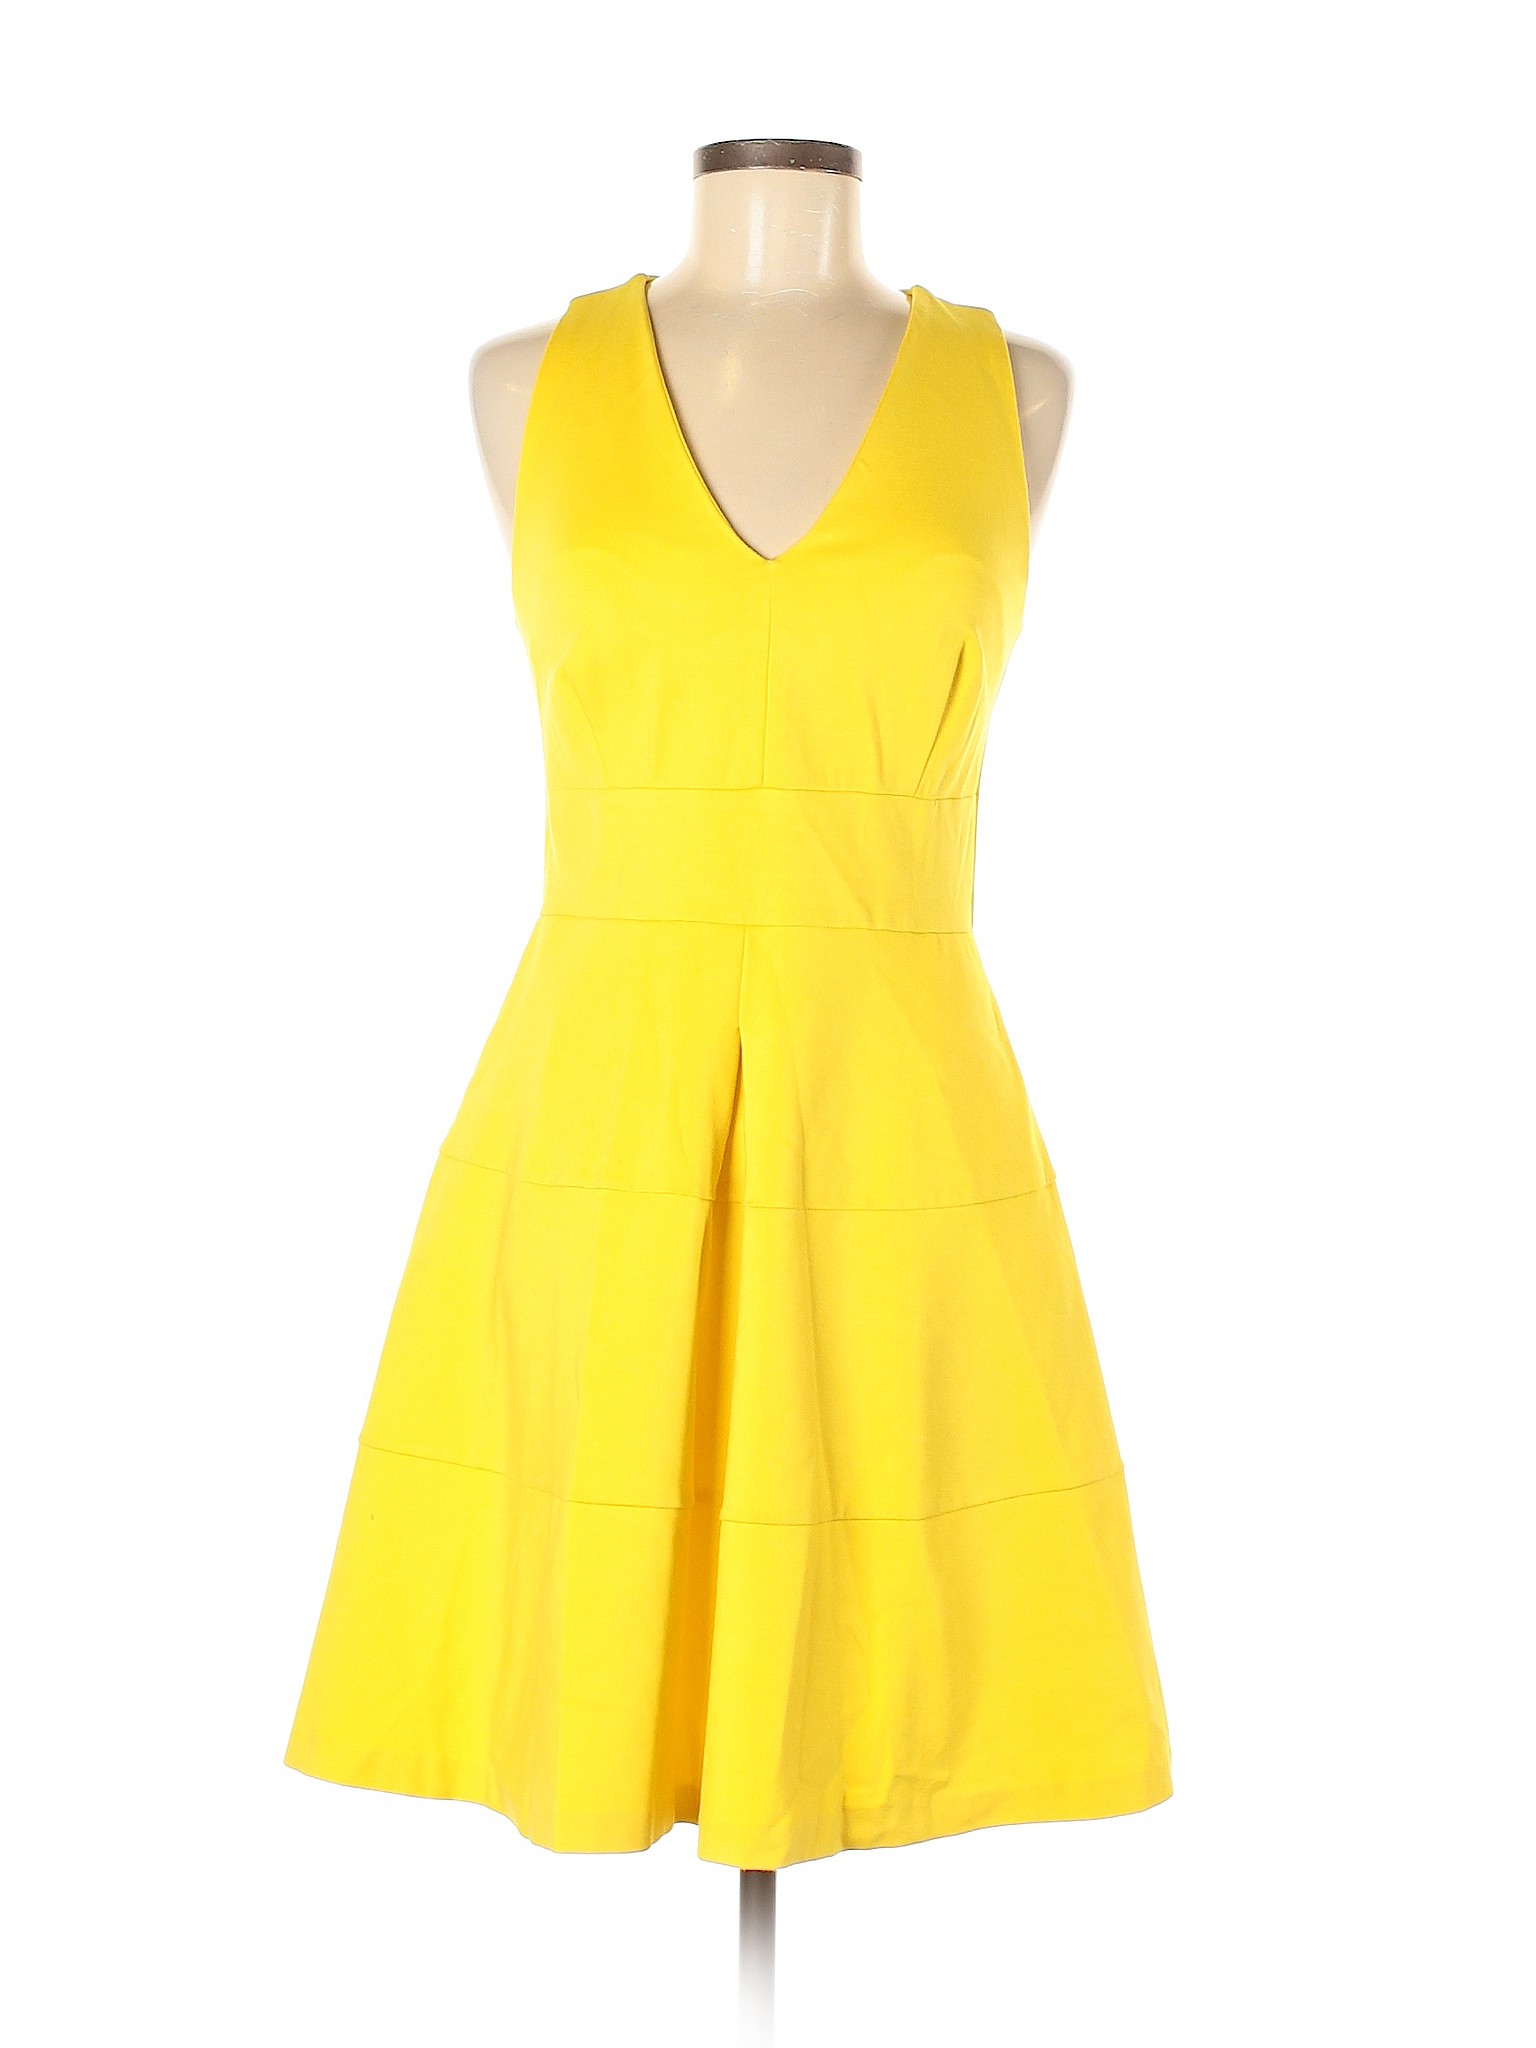 Banana Republic Women Yellow Casual Dress 8 Petite | eBay